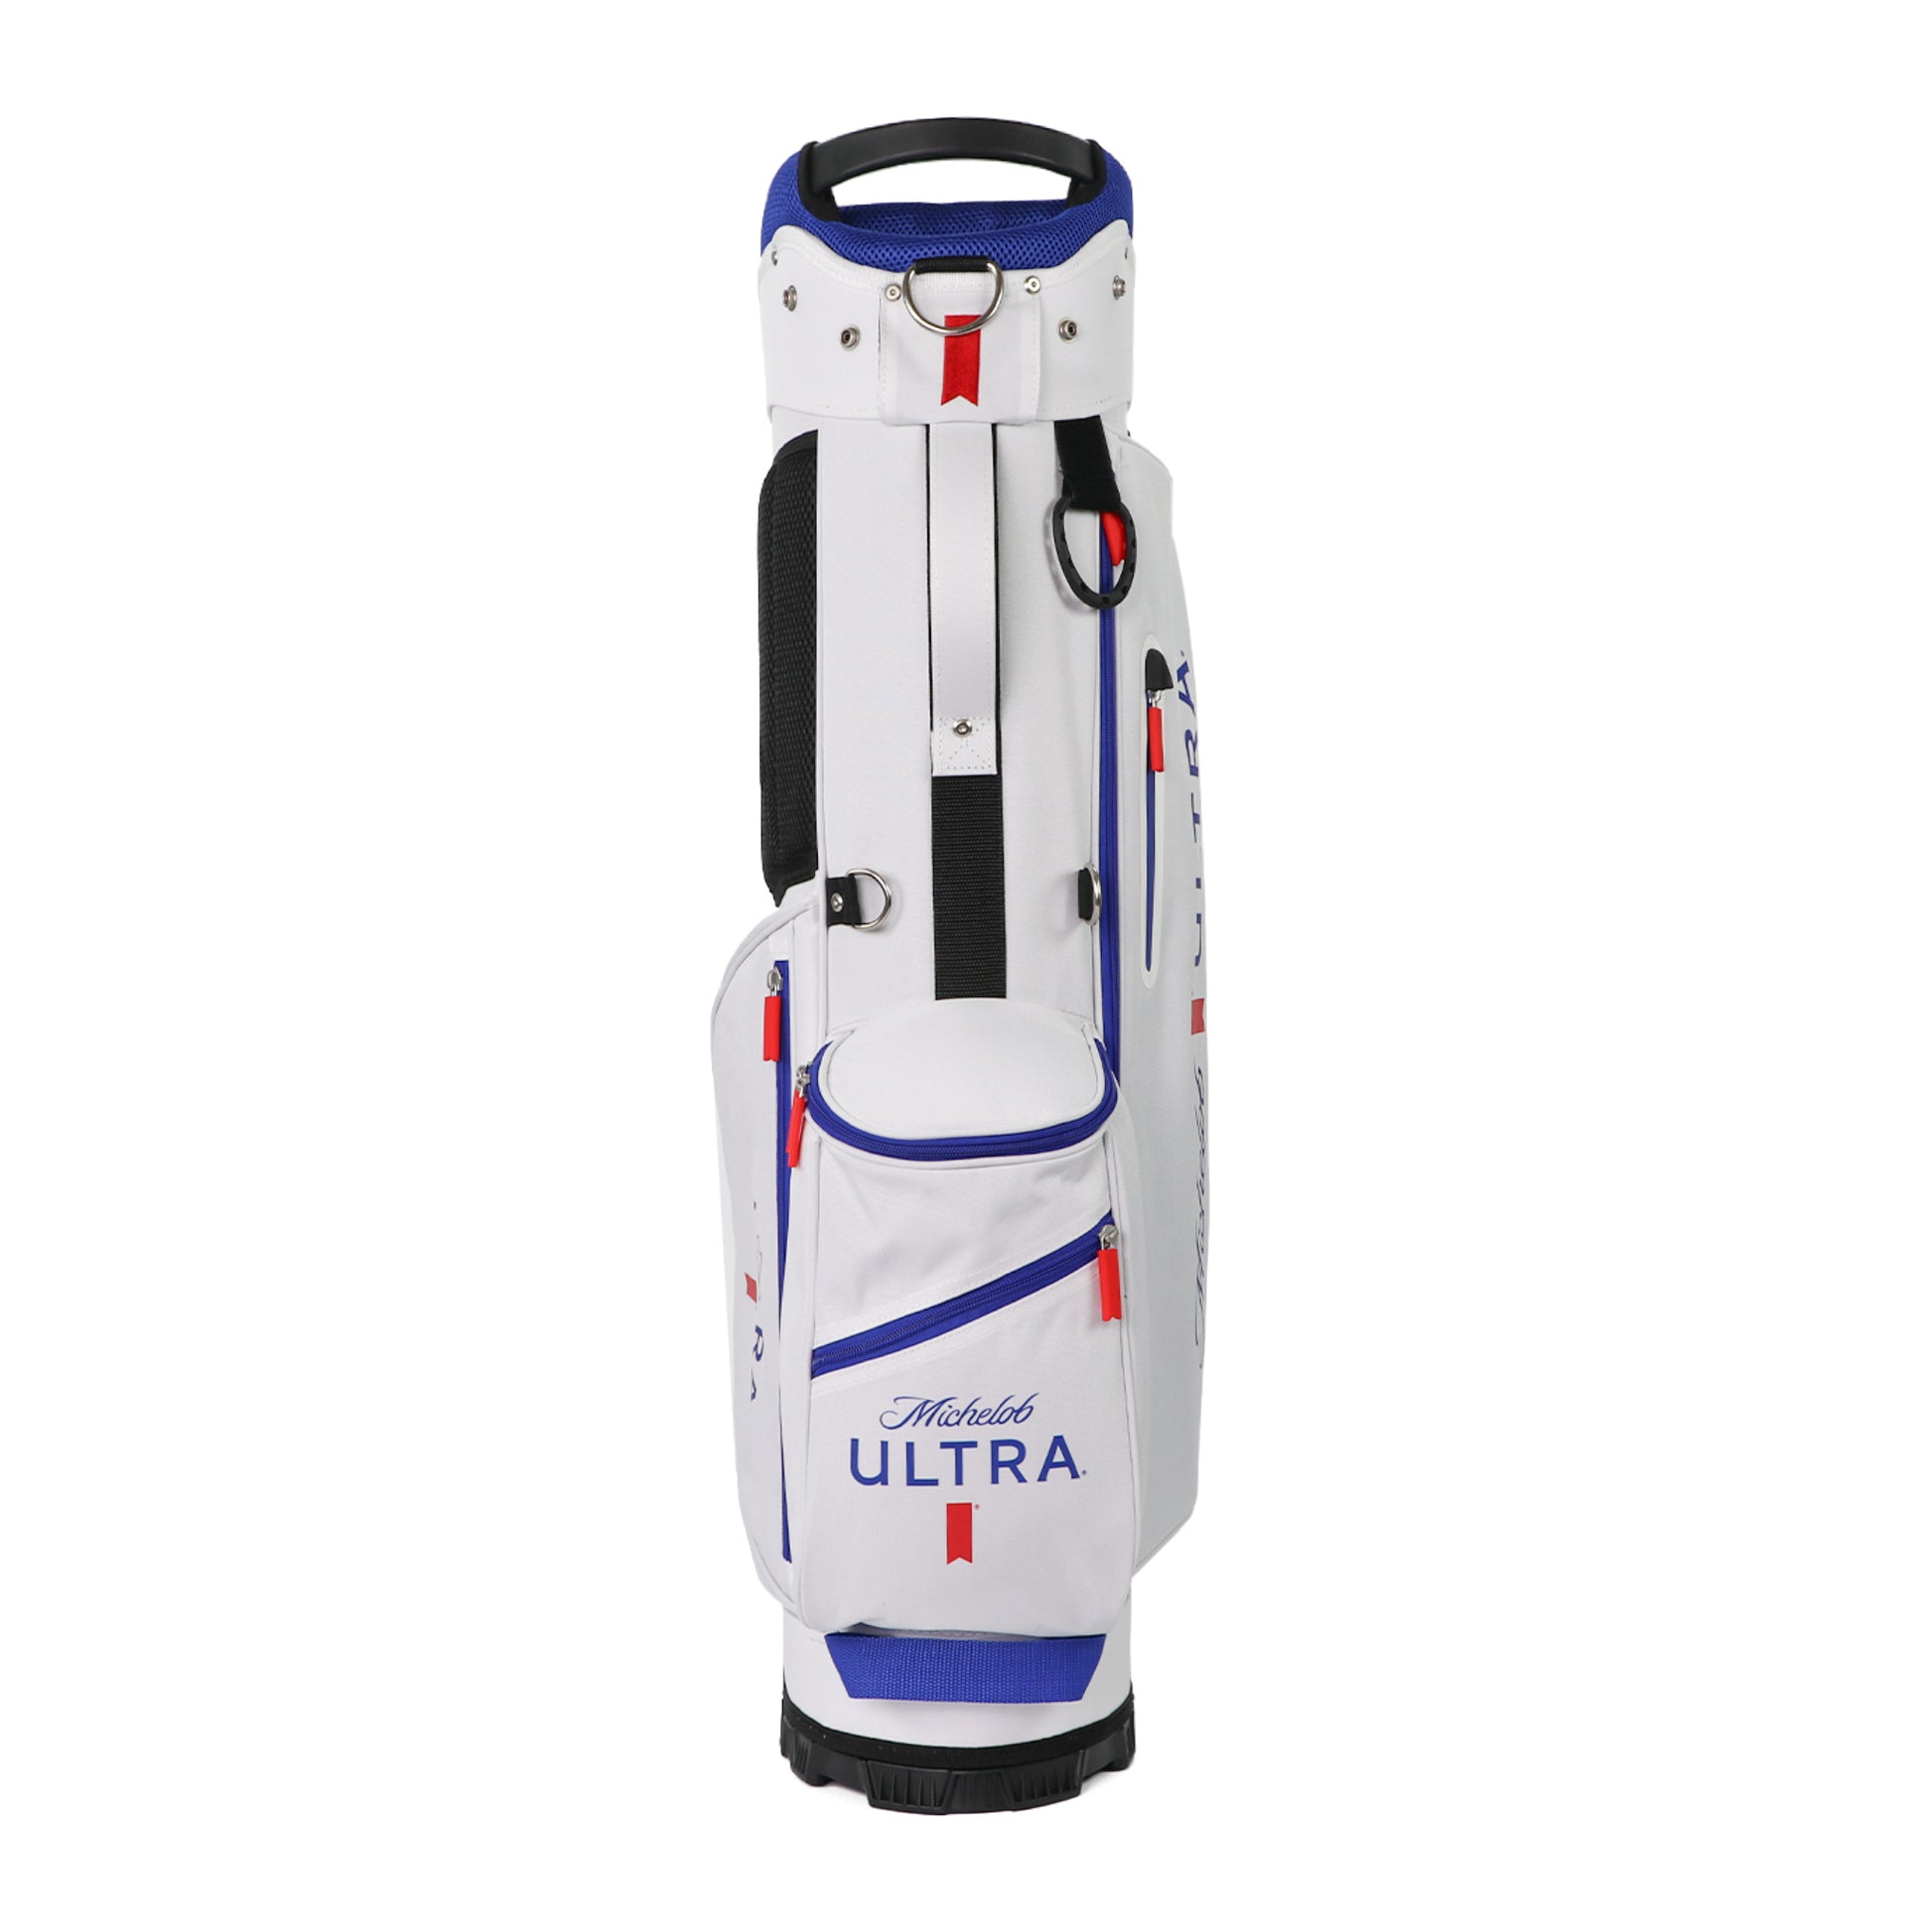 Michelob ULTRA golf bag standing upright